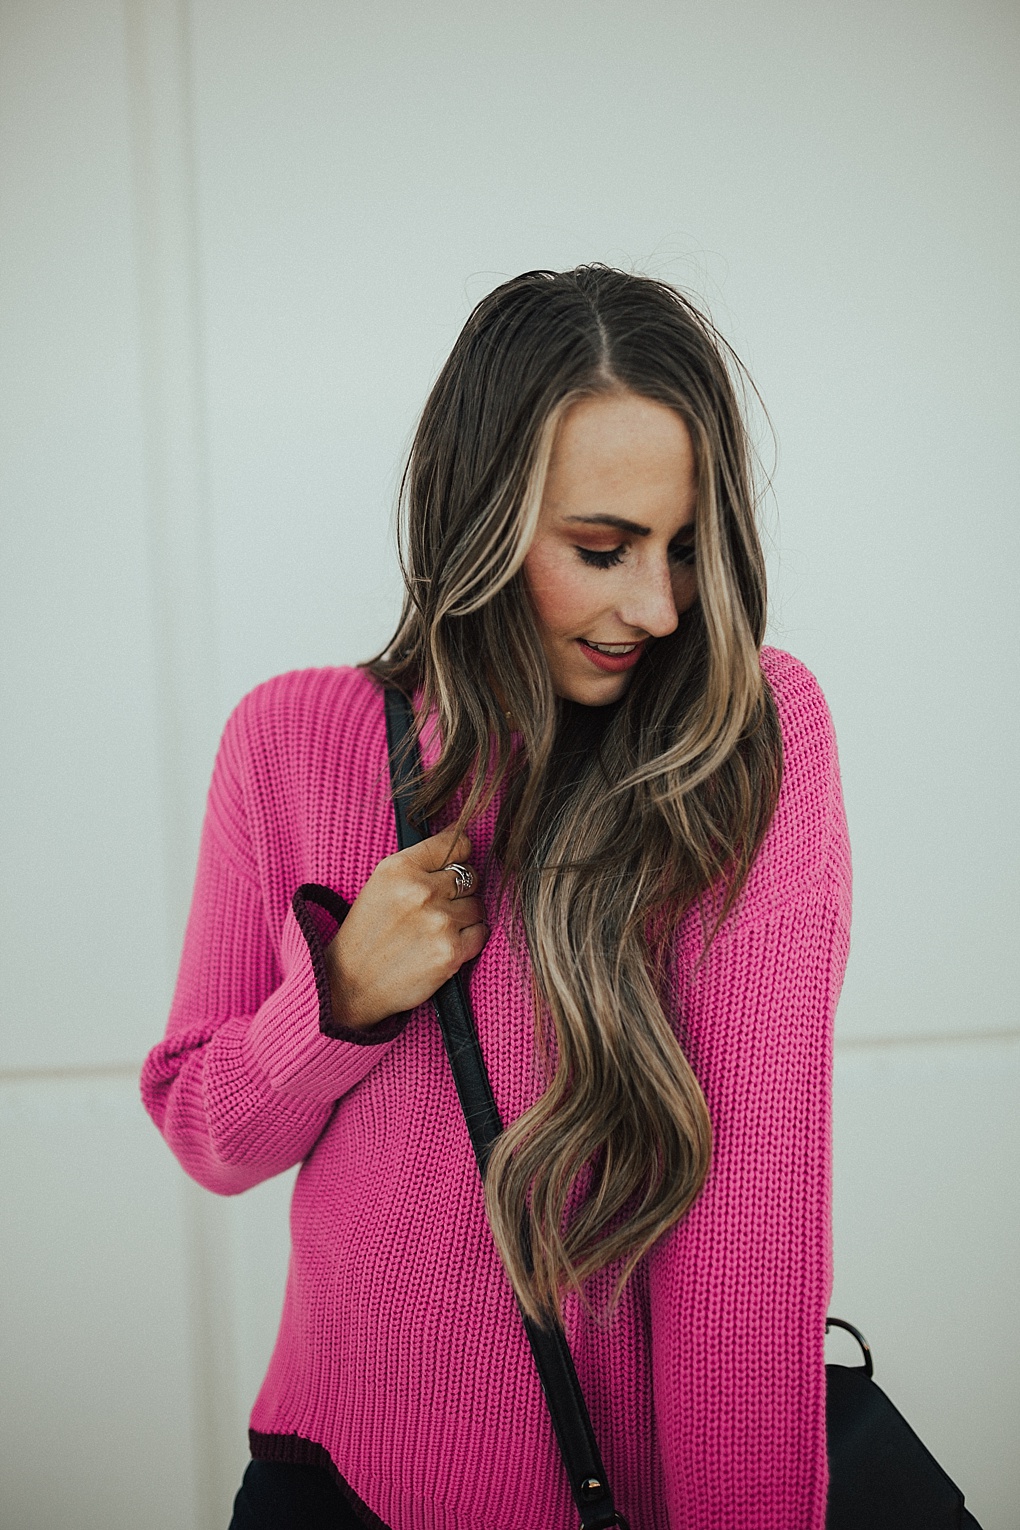 Wearing Colorful Sweaters Through Fall & Winter by Utah fashion blogger Dani Marie